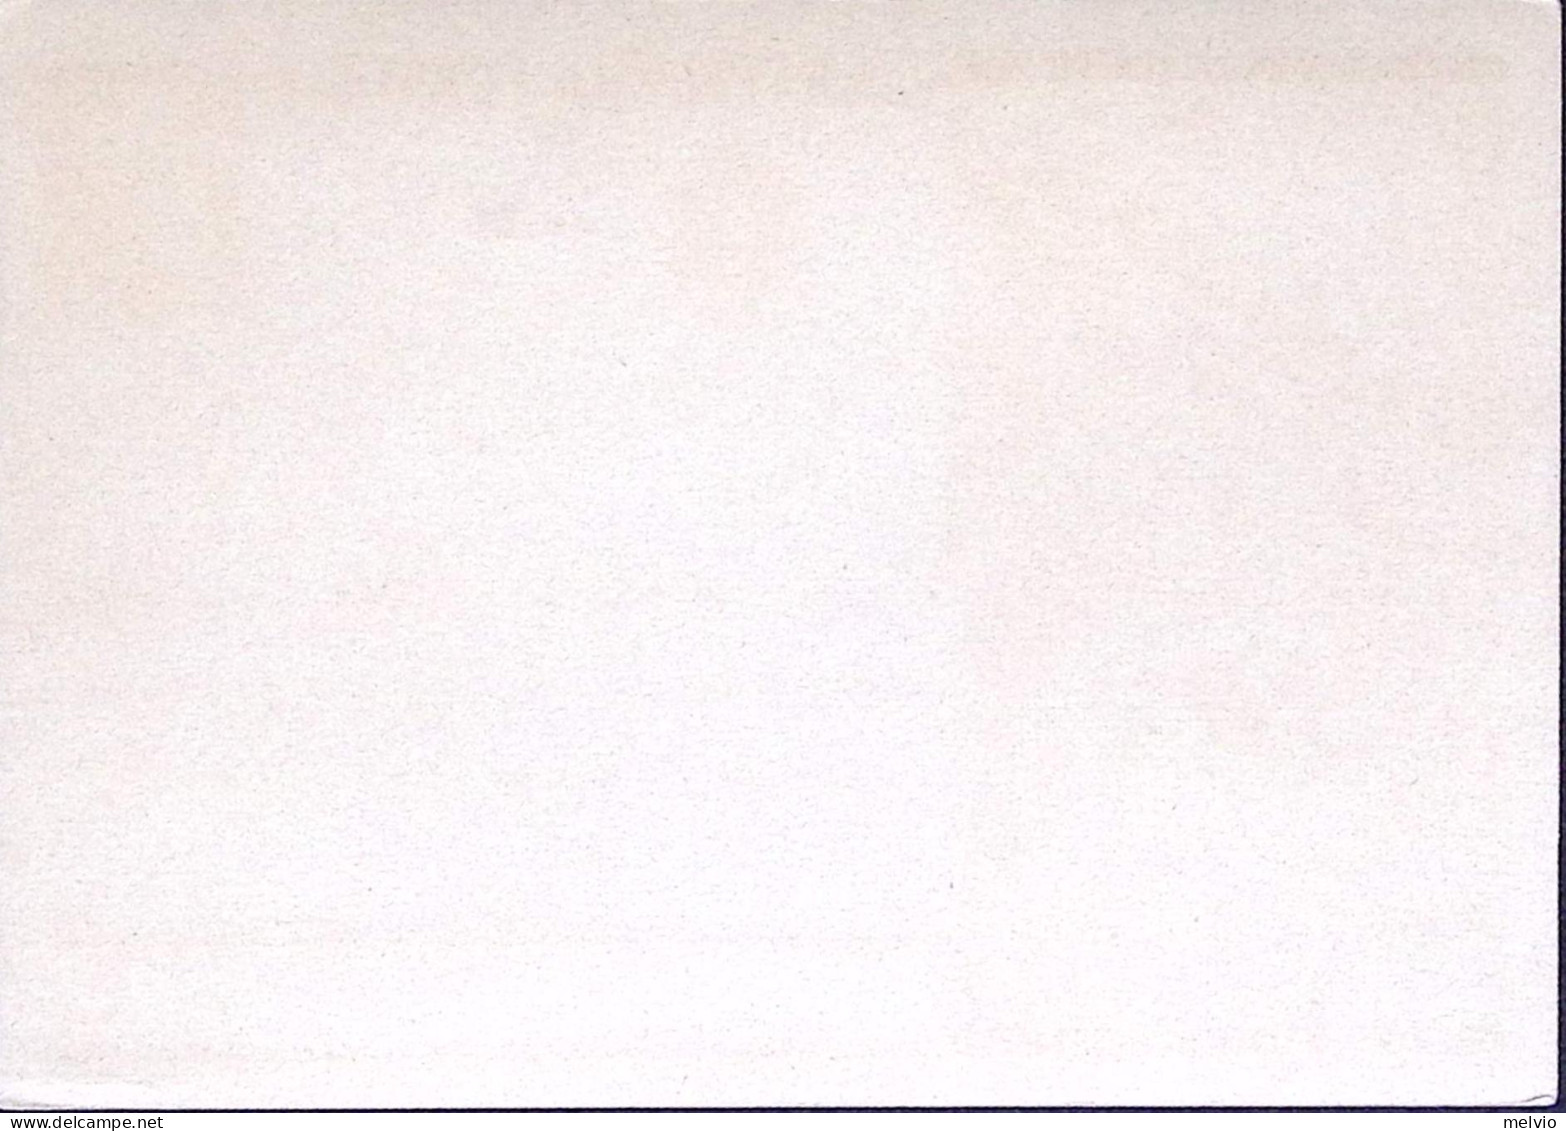 1931-Cartolina Postale Opere Regime C.30 Istituto Anatomia Umana Nuova - Entero Postal